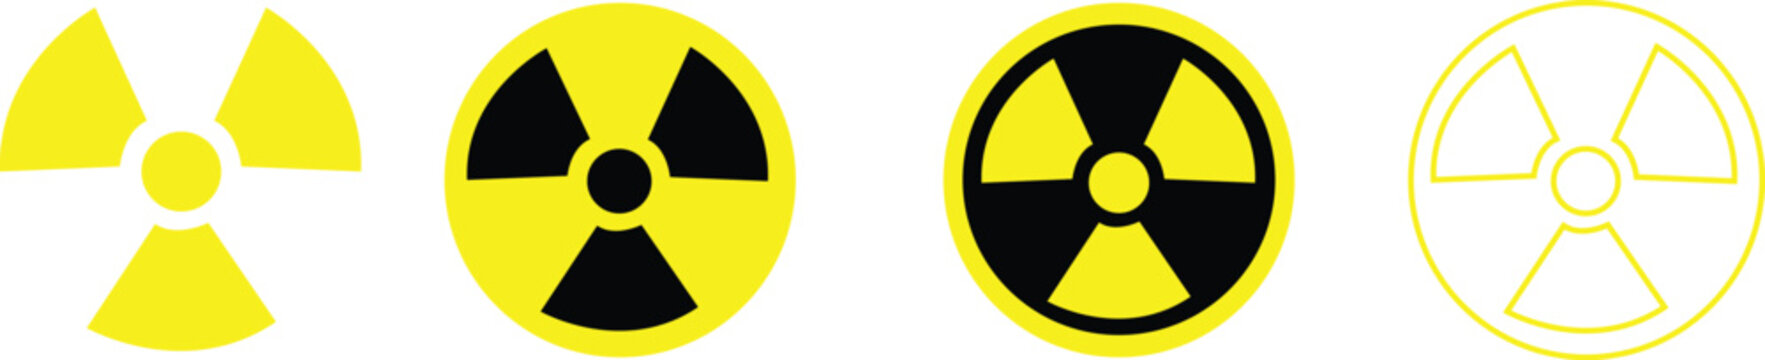 set of Radioactive icons nuclear symbol. Uranium reactor radiation hazard. Radioactive toxic danger sign design isolated on transparent background. Nuclear bomb symbol. Danger icons.